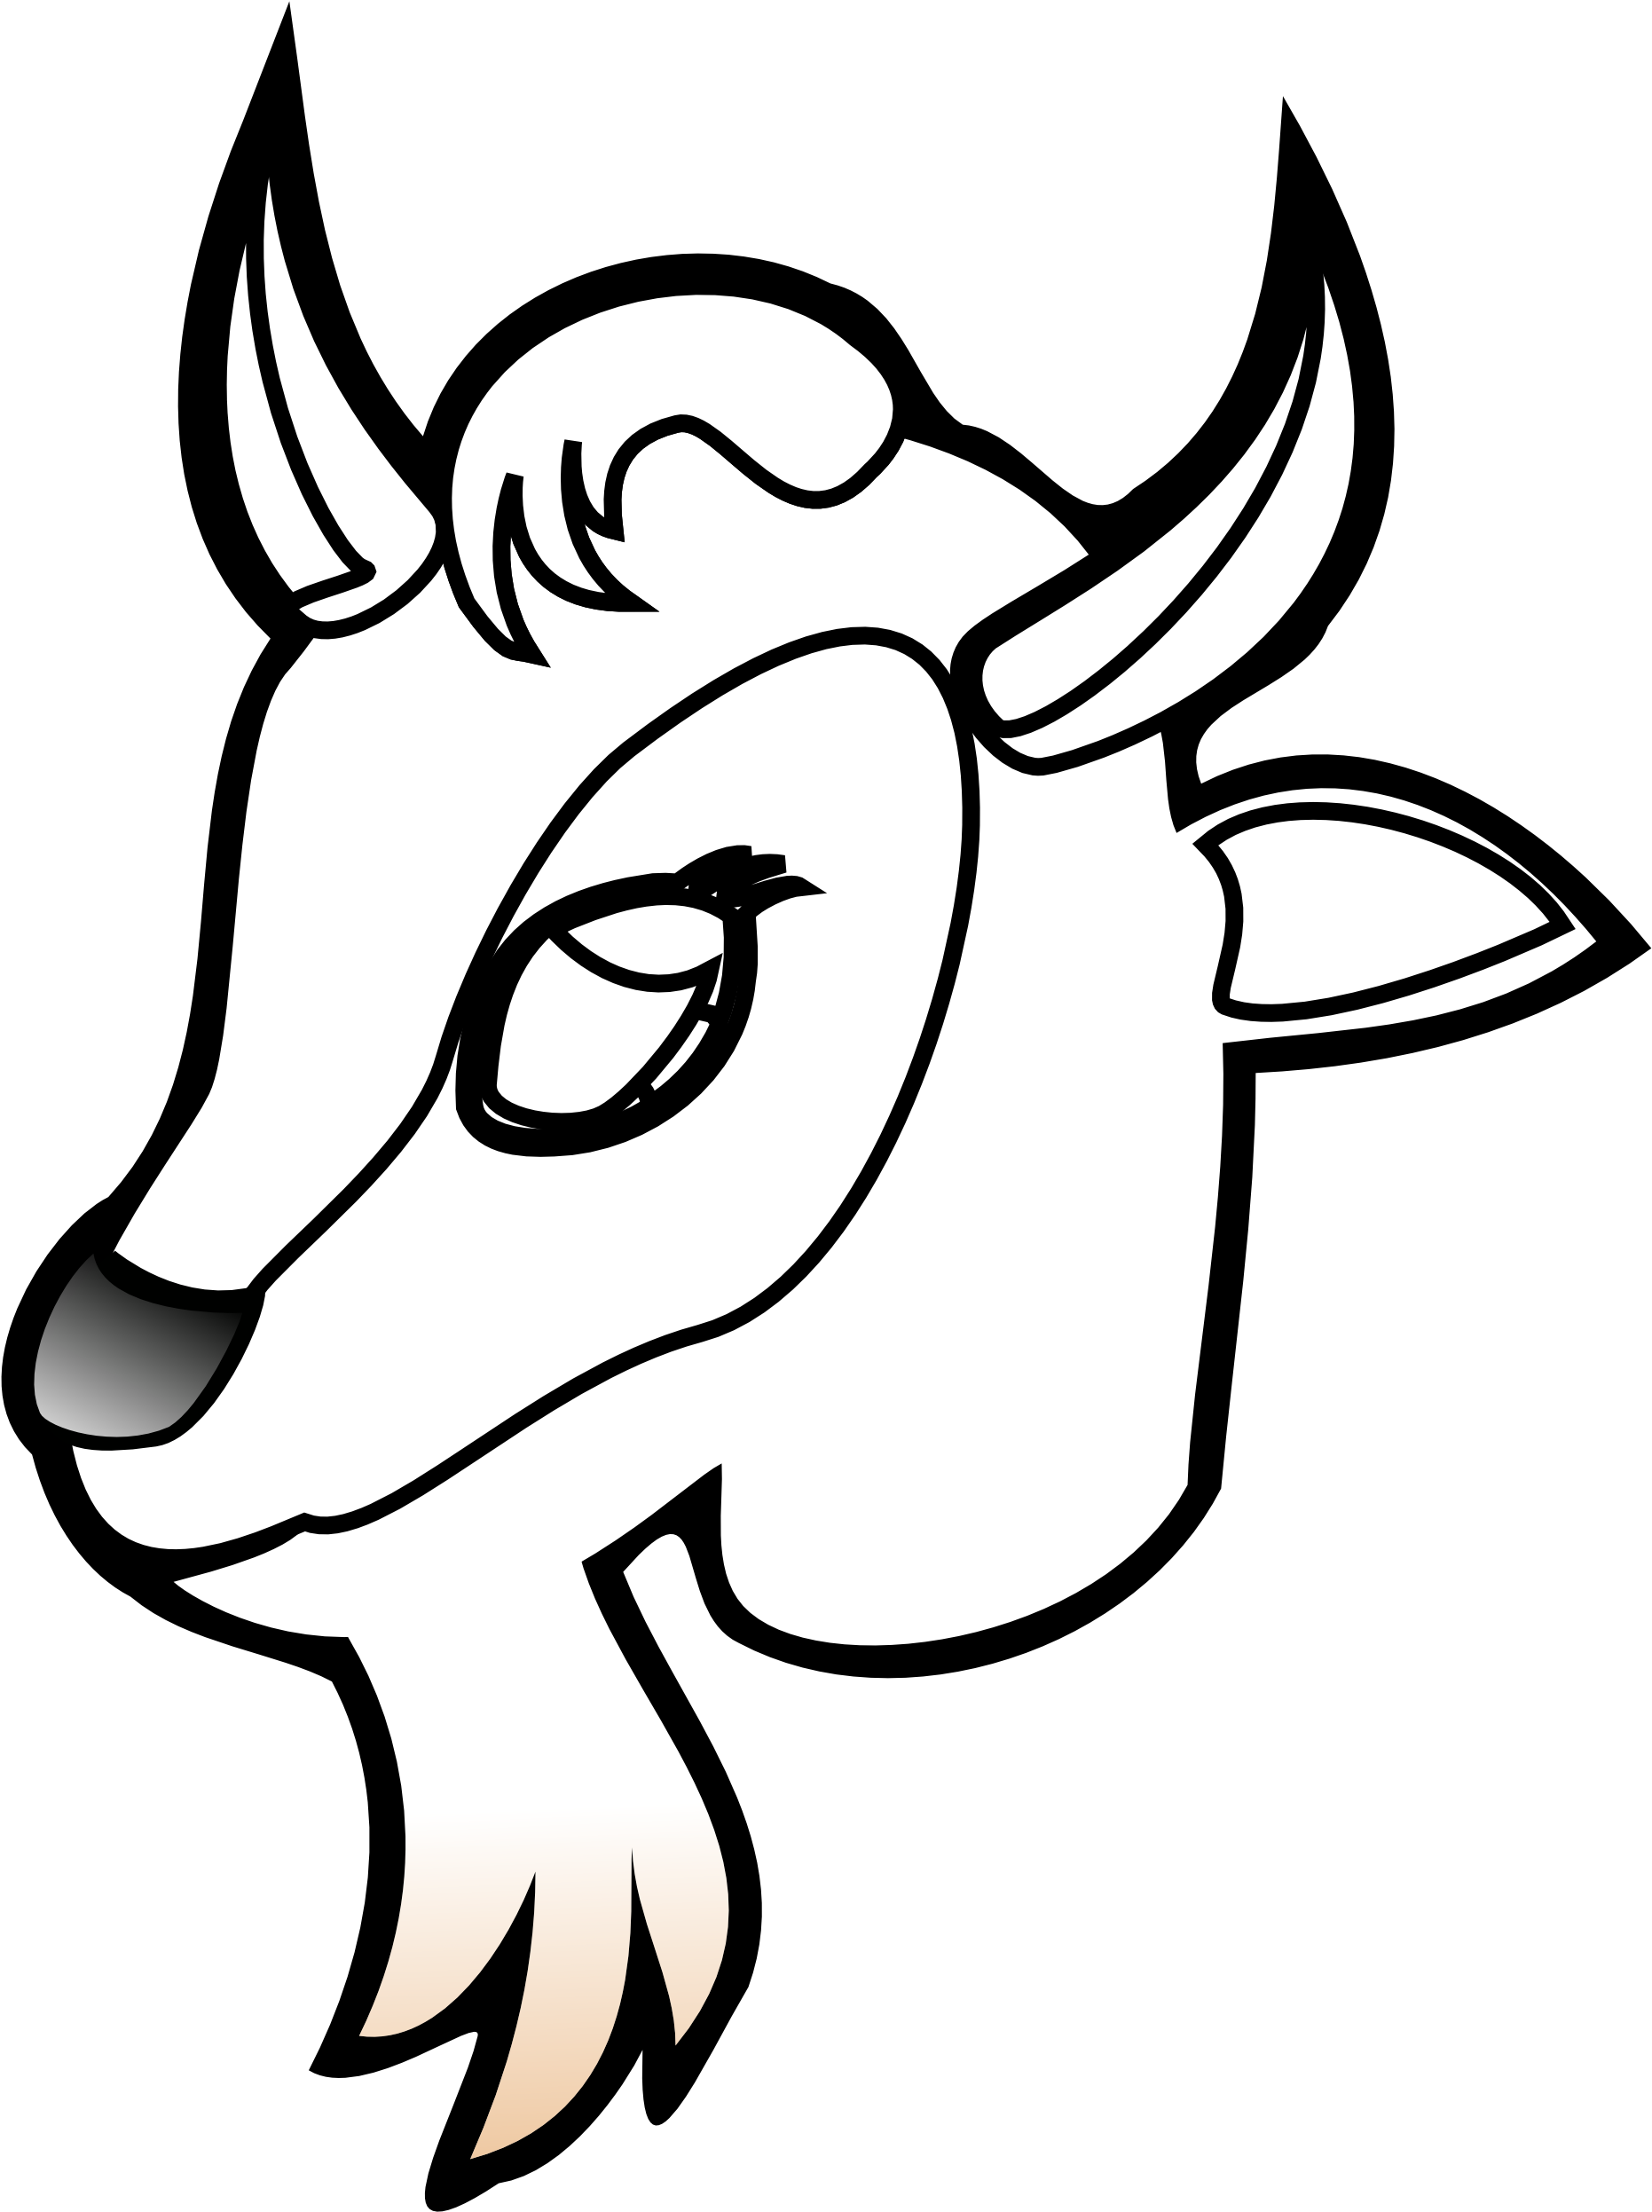 Goat - Clipart - Black - And - White - Cau Lac Bo Bong Da (2555x2555)